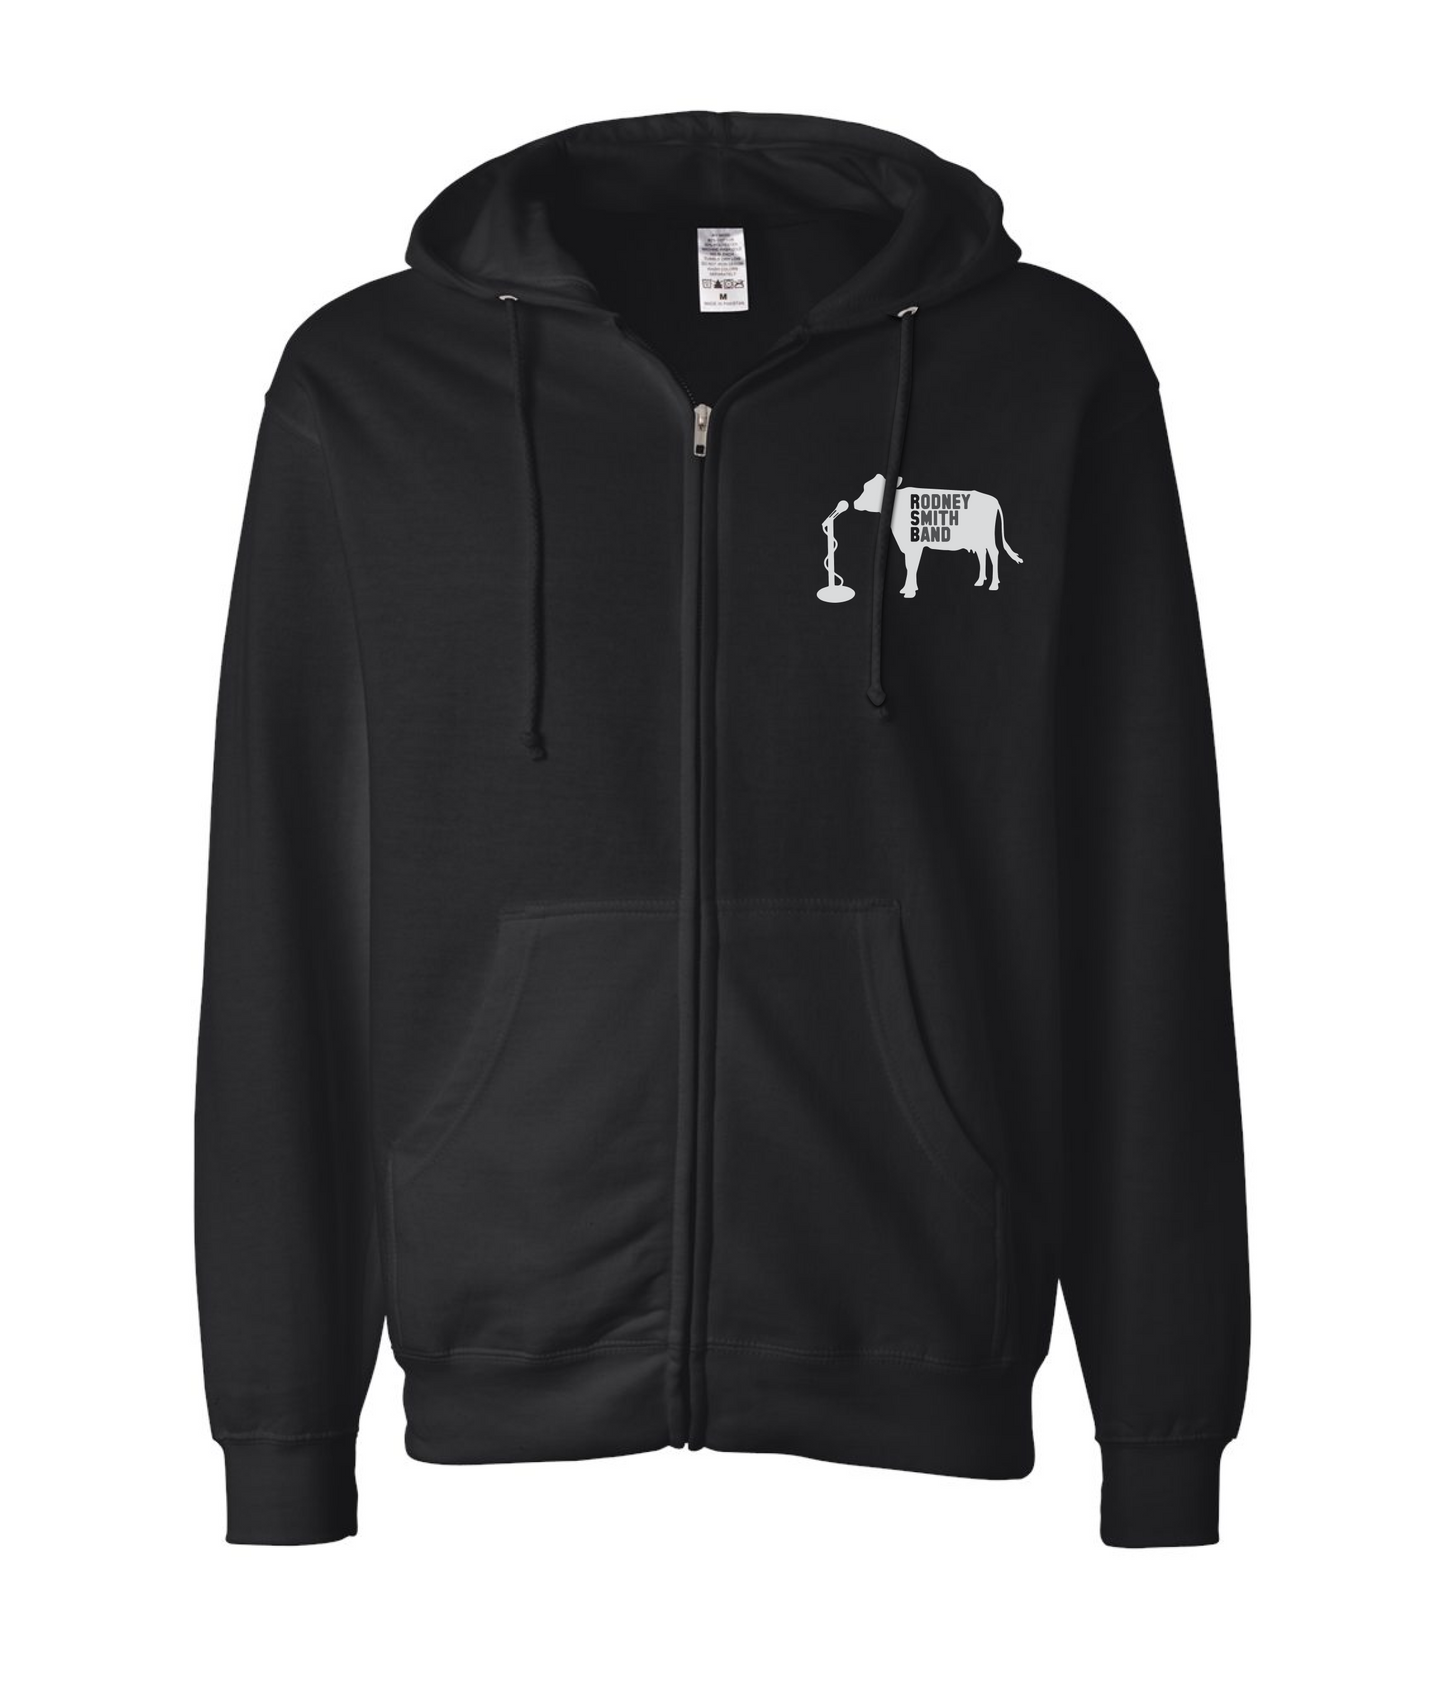 Rodney Smith Band - Cow Logo - Black Zip Hoodie